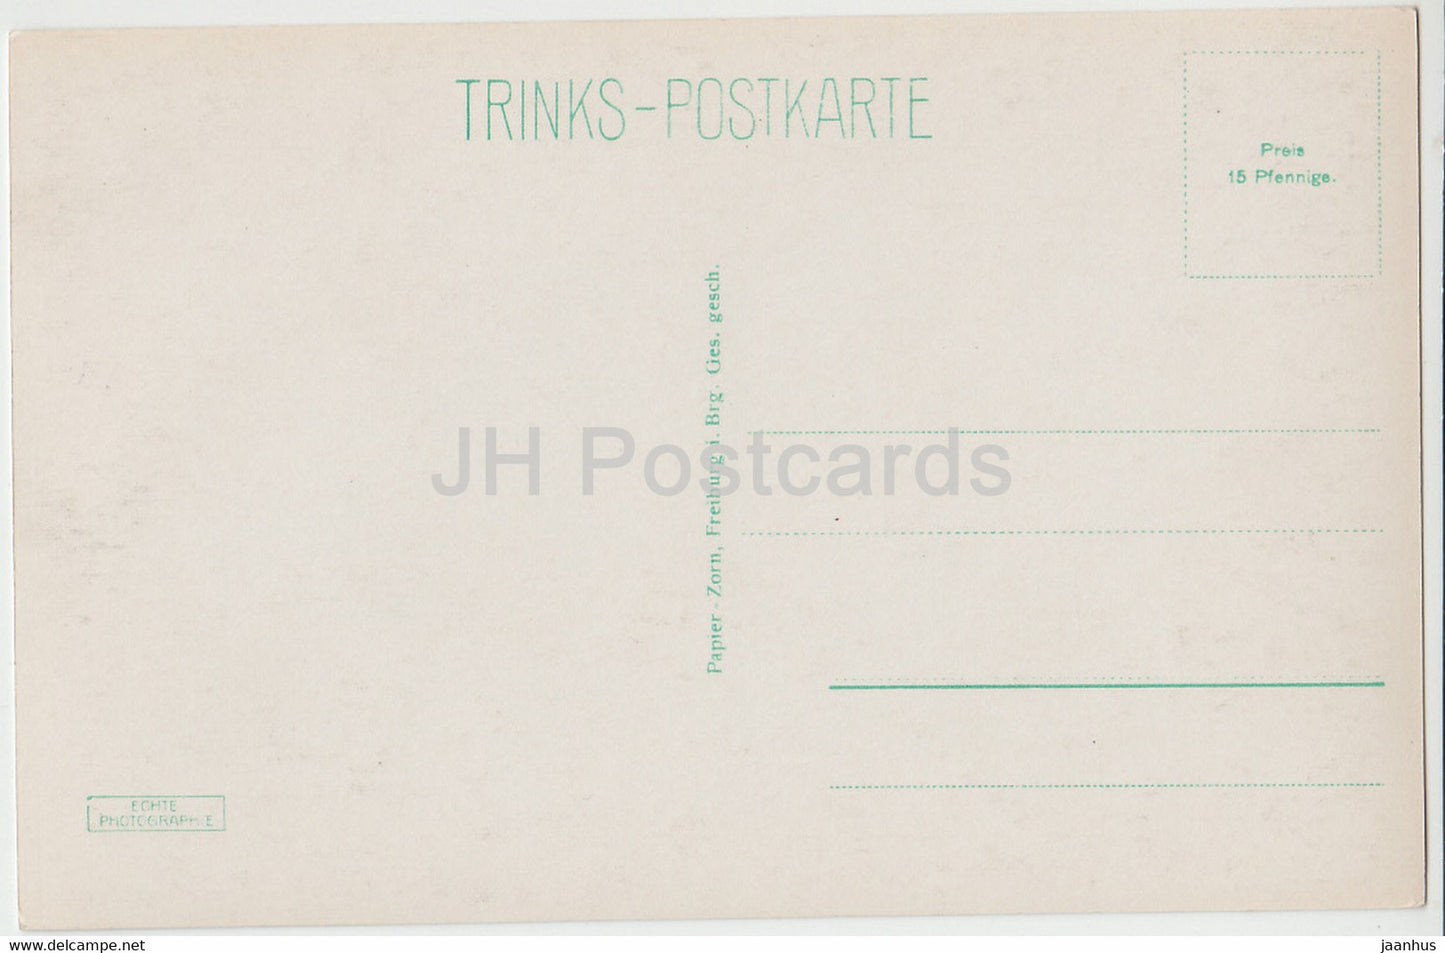 Fribourg i Breisgau - Kaufhaus - 11 - carte postale ancienne - Allemagne - inutilisée